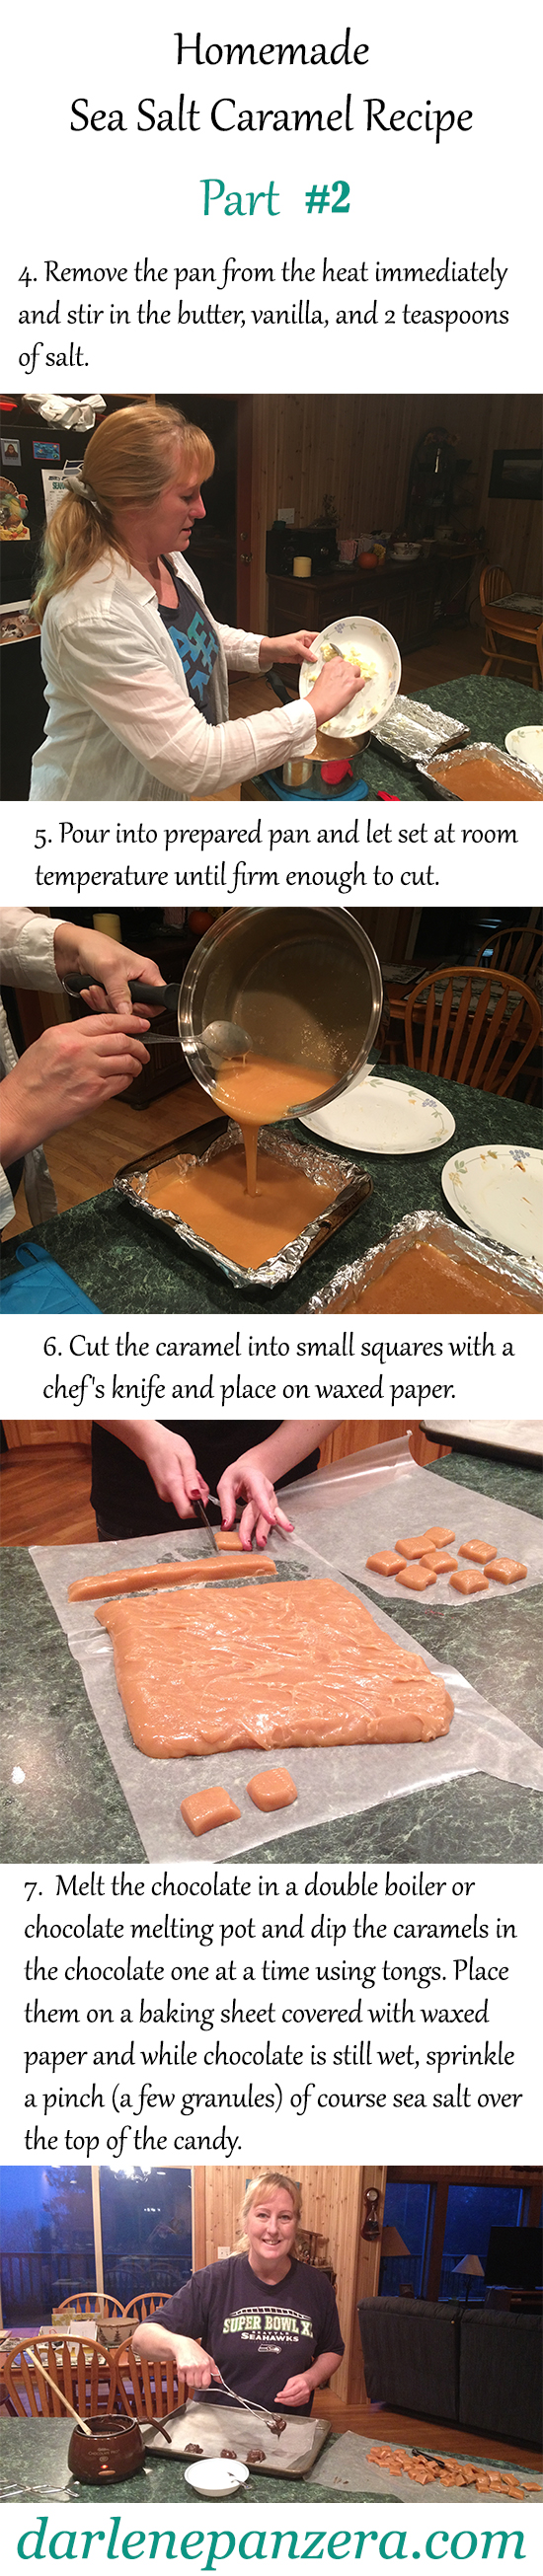 Homemade Sea Salt Caramel Recipe Part 2